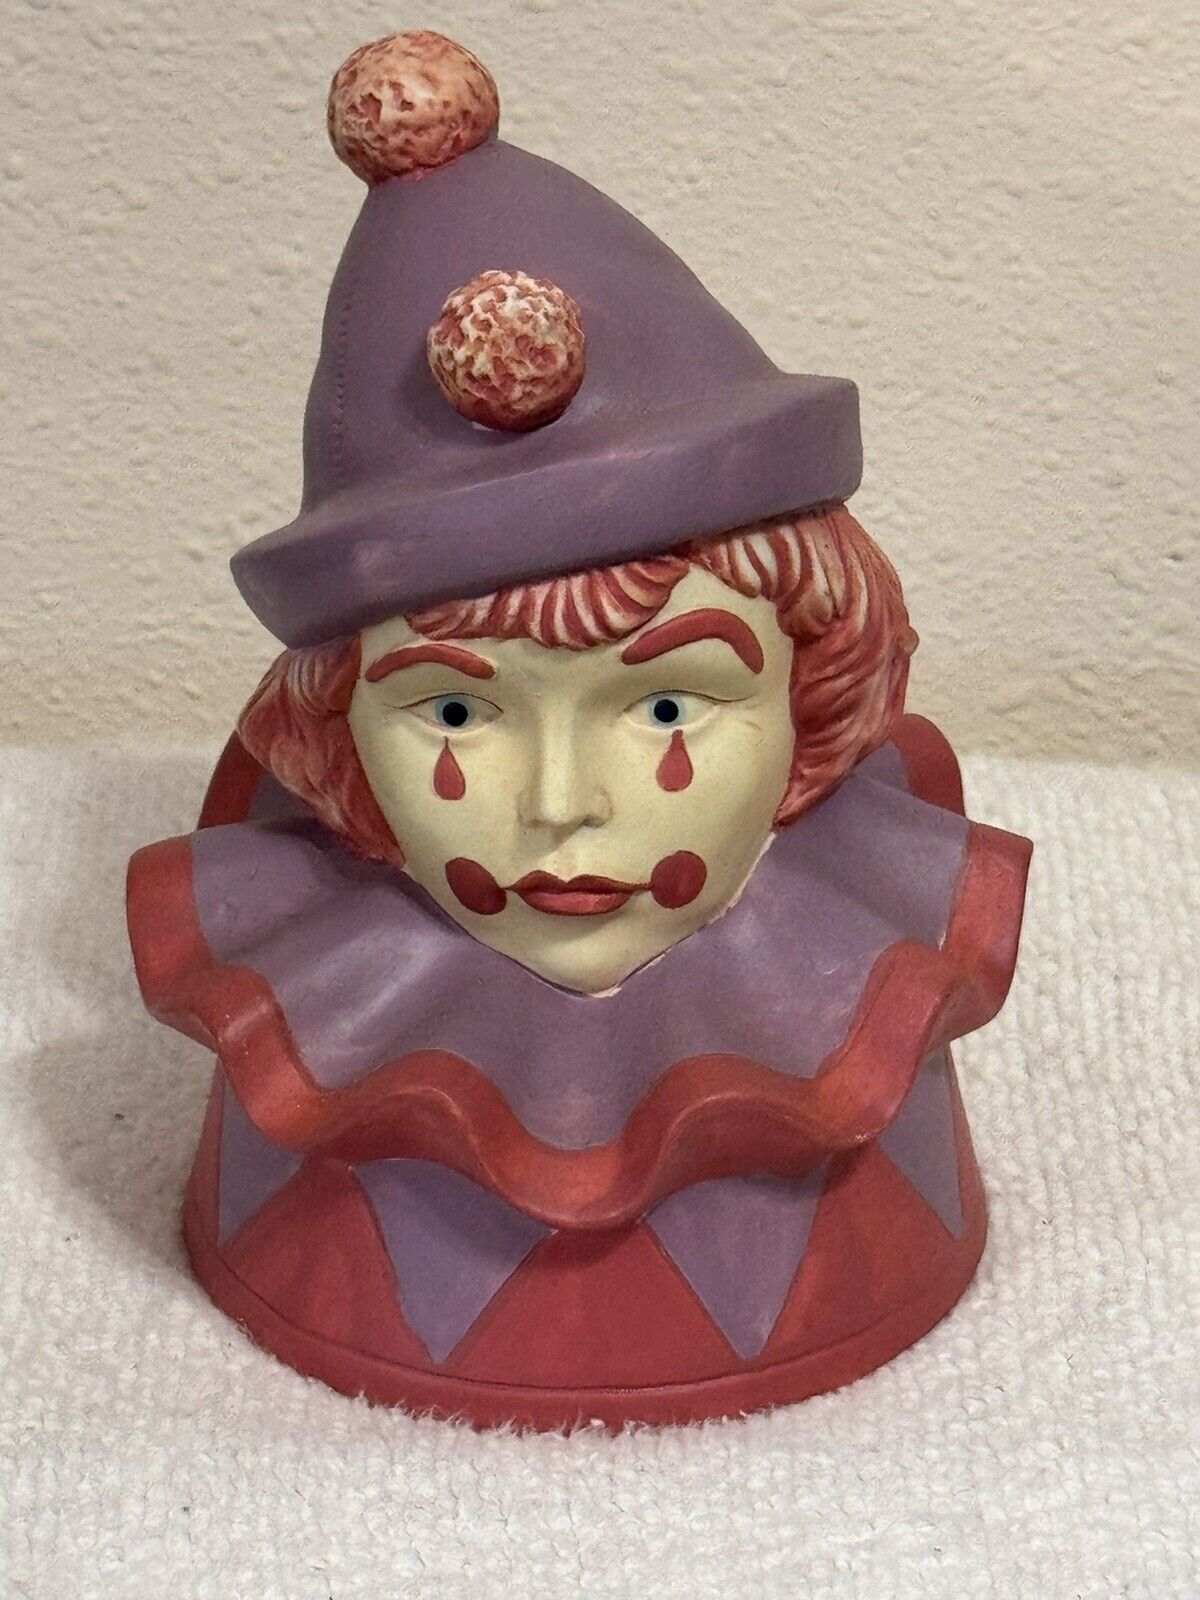 Artmark 1990 Ceramic Musical Clown Plays Send In The Clowns